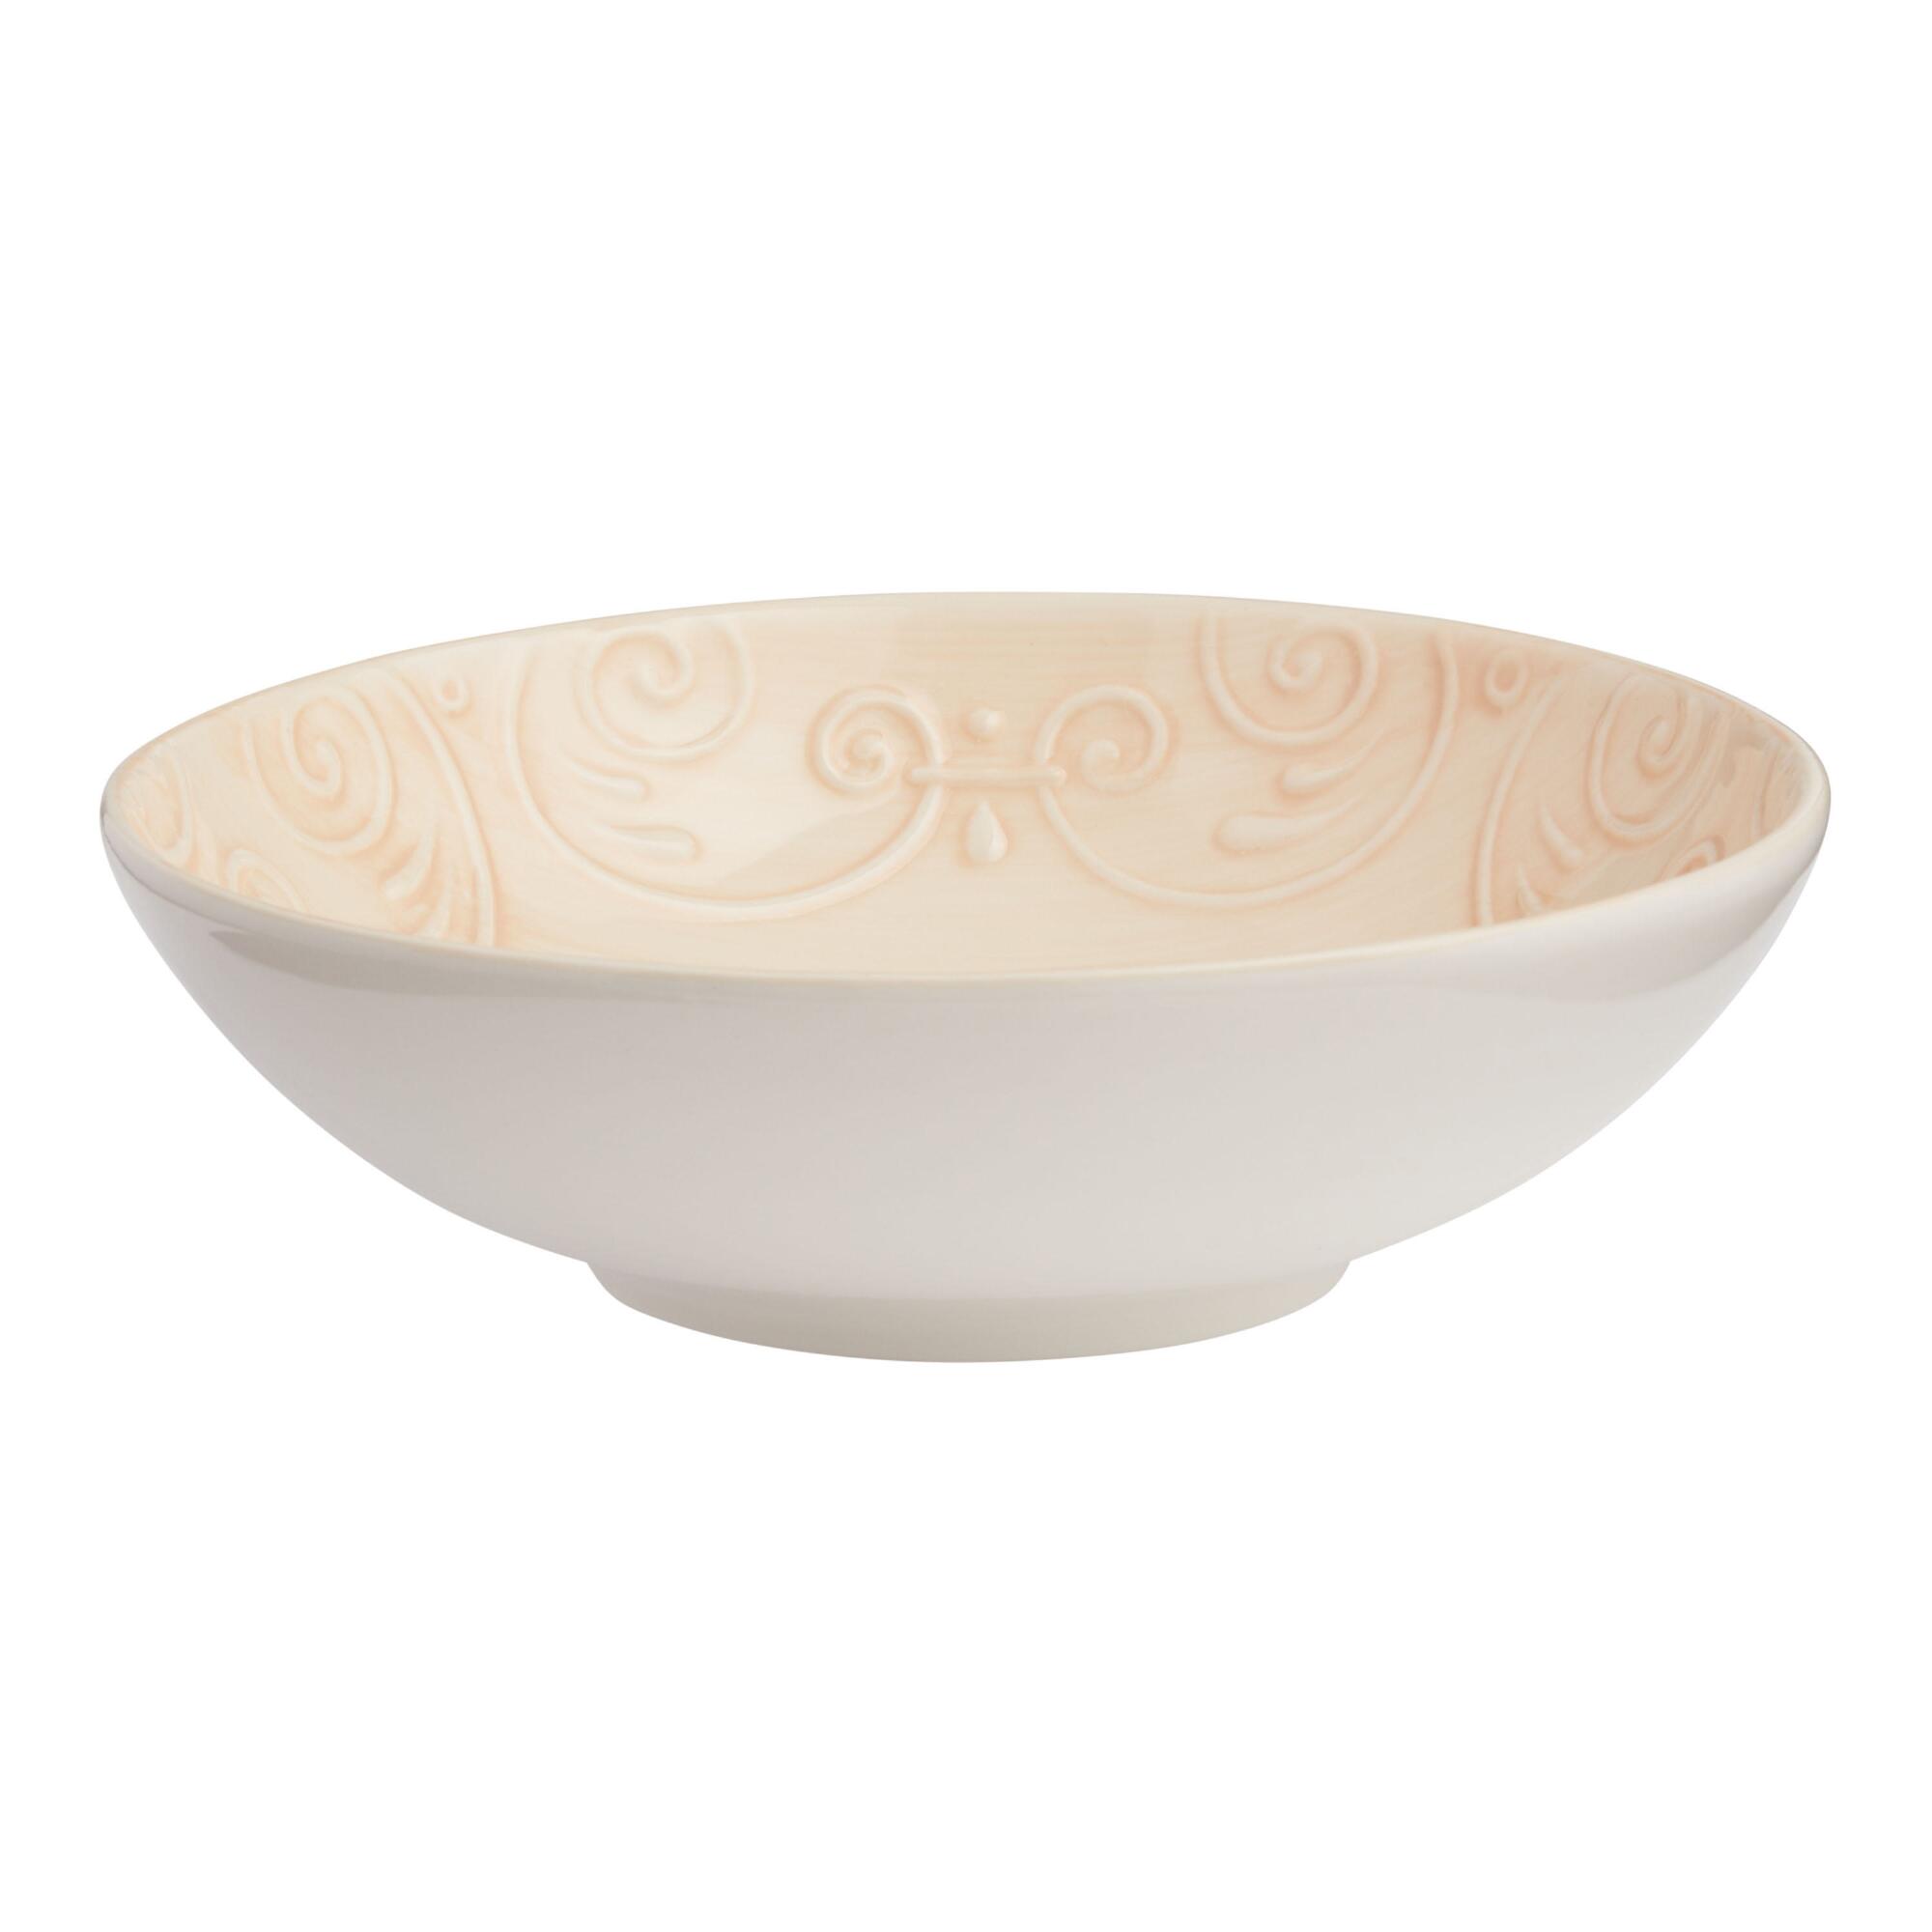 Embossed Ceramic Avellino Serving Bowl: Cream - Earthenware by World Market